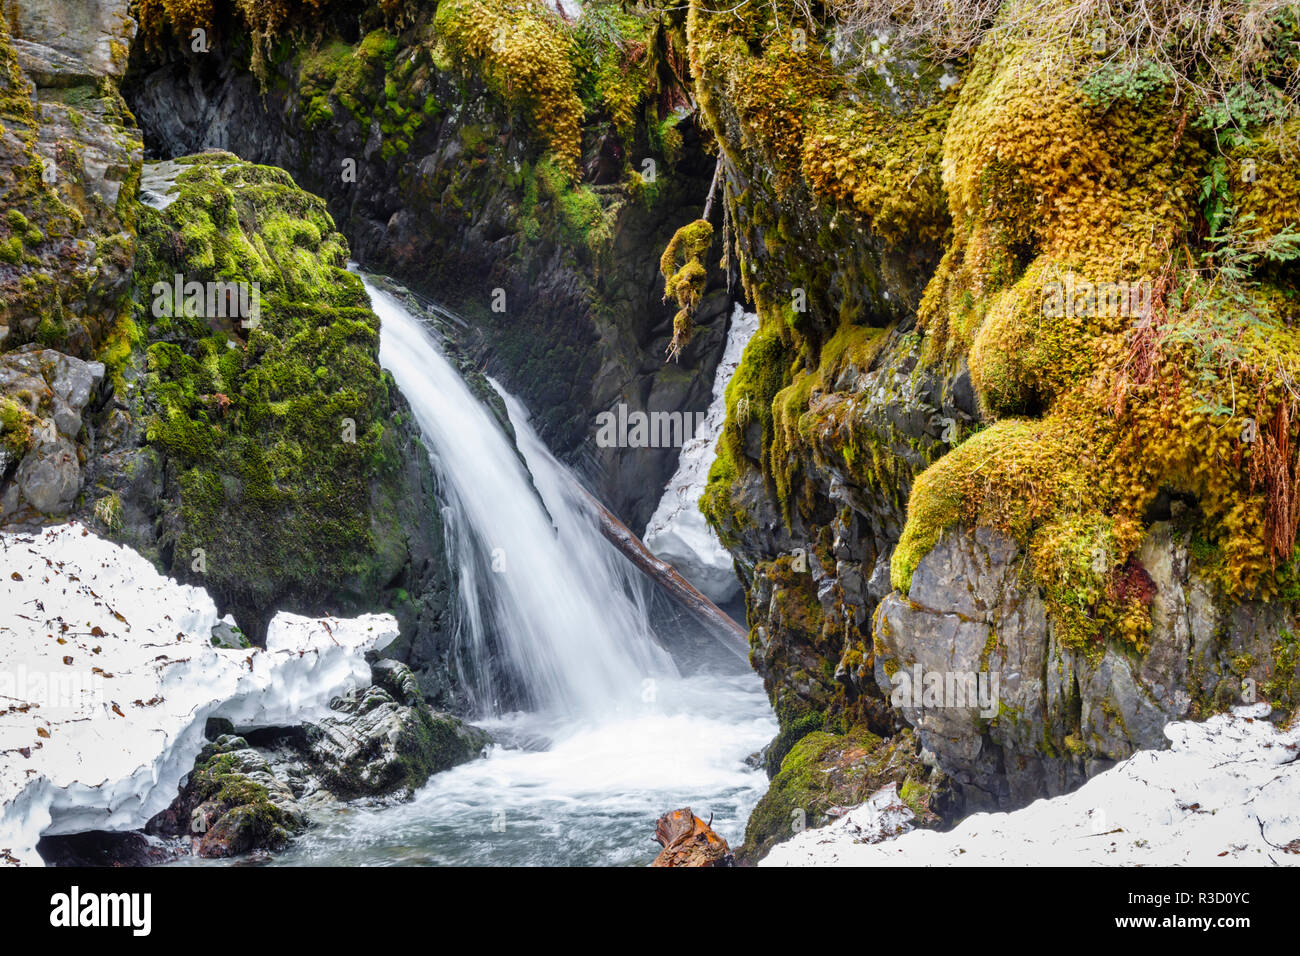 USA, Alaska. A portion of Virgin Falls in Girdwood, Alaska. Stock Photo